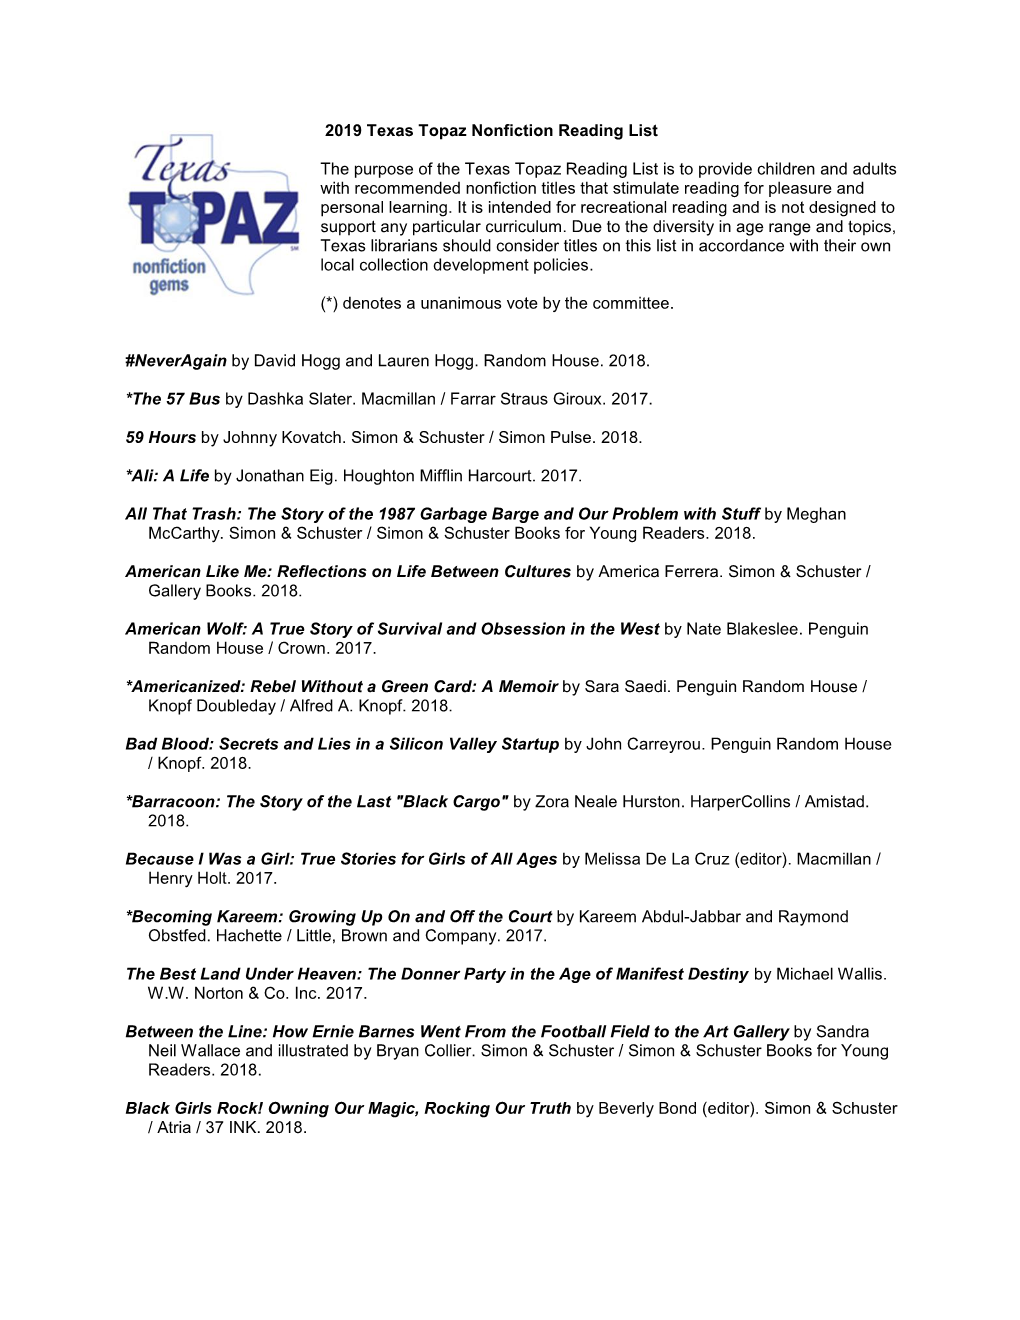 Texas Topaz Nonfiction Reading List 2019